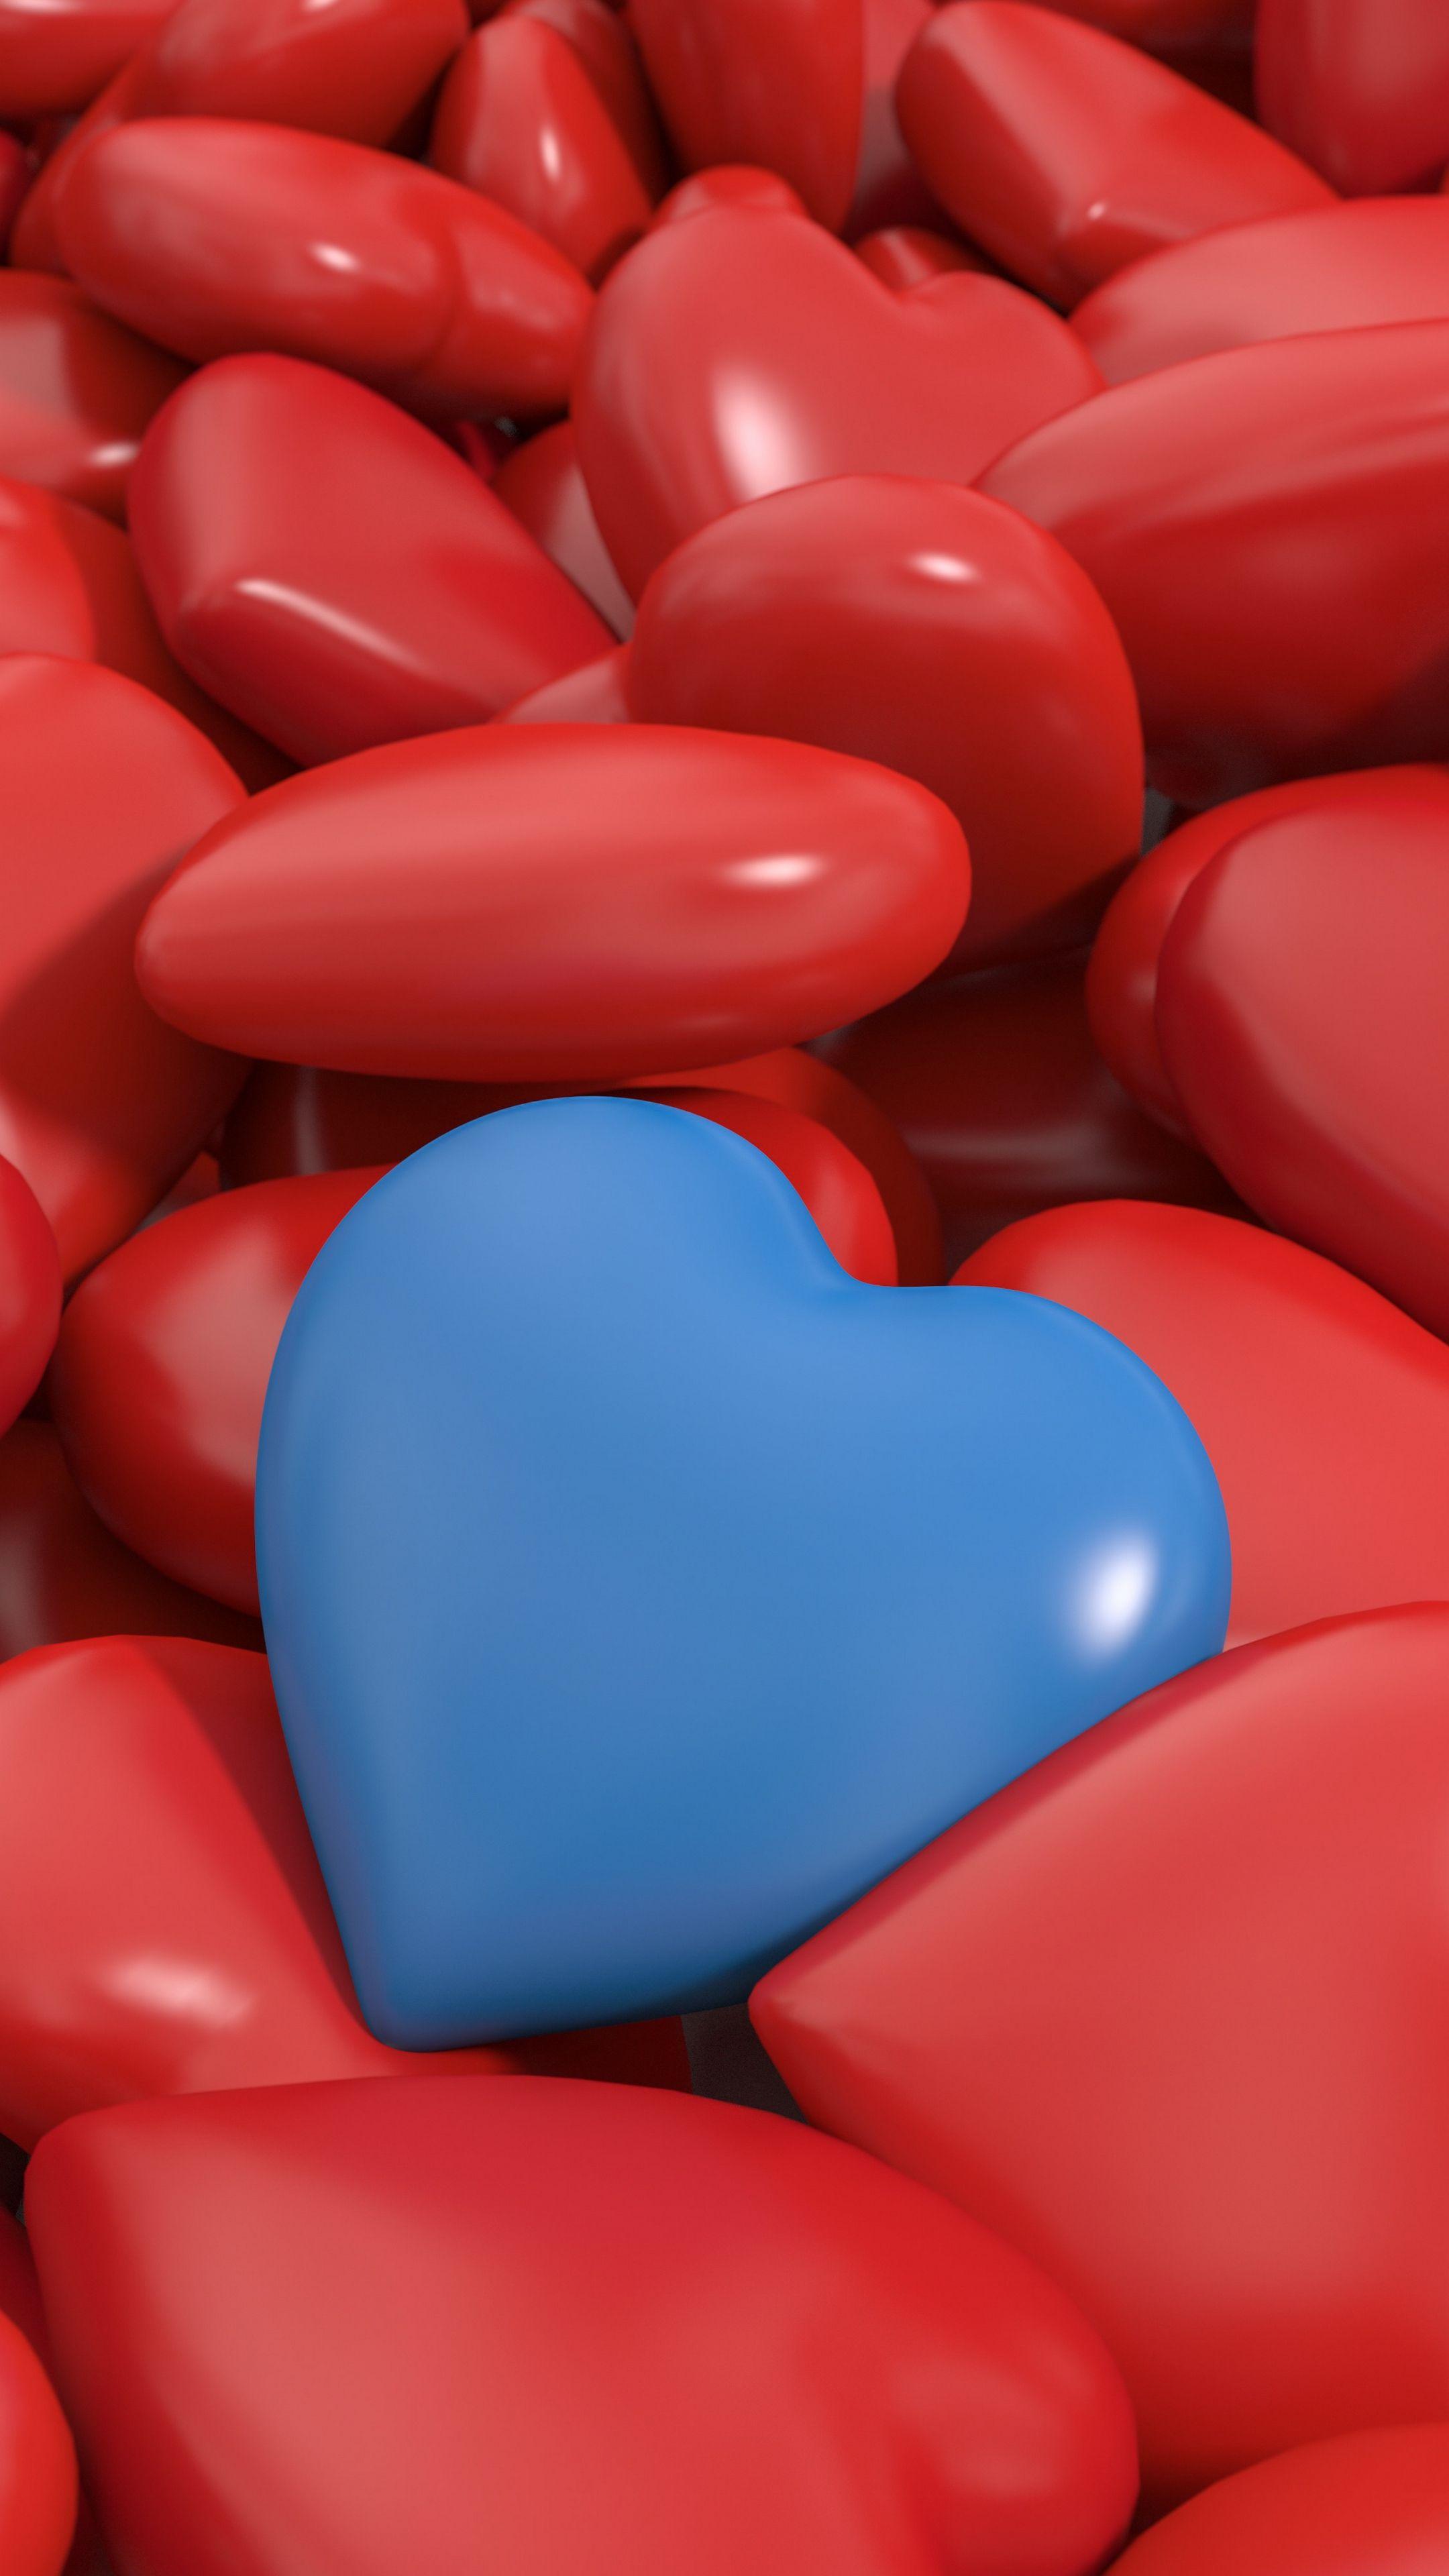 Emotions #heart #red #blue d #wallpaper HD 4k background